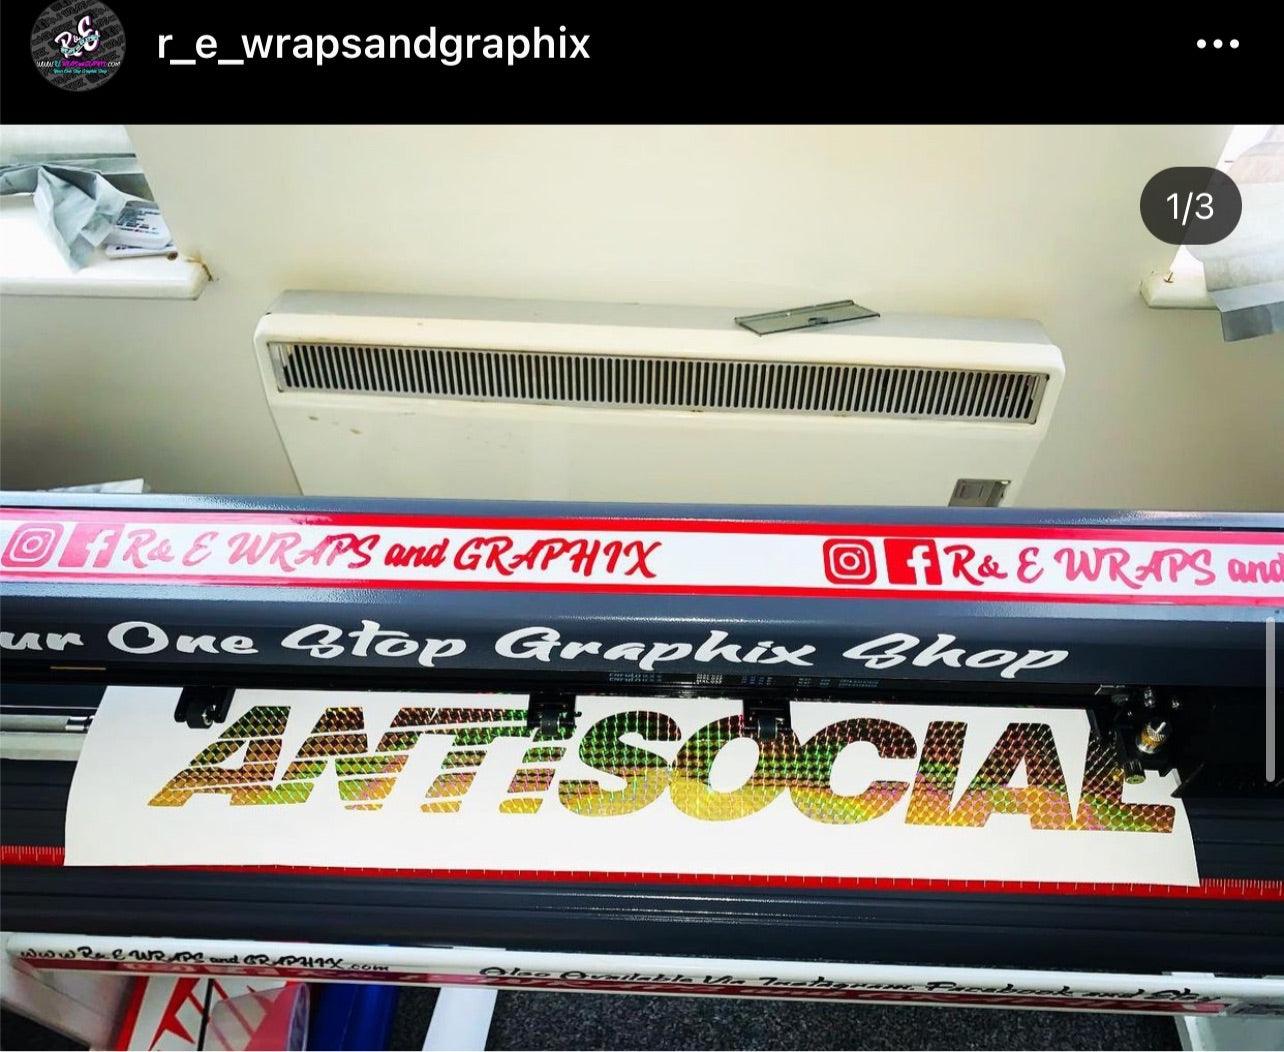 Antisocial Rear Window Sticker - rewrapsandgraphics